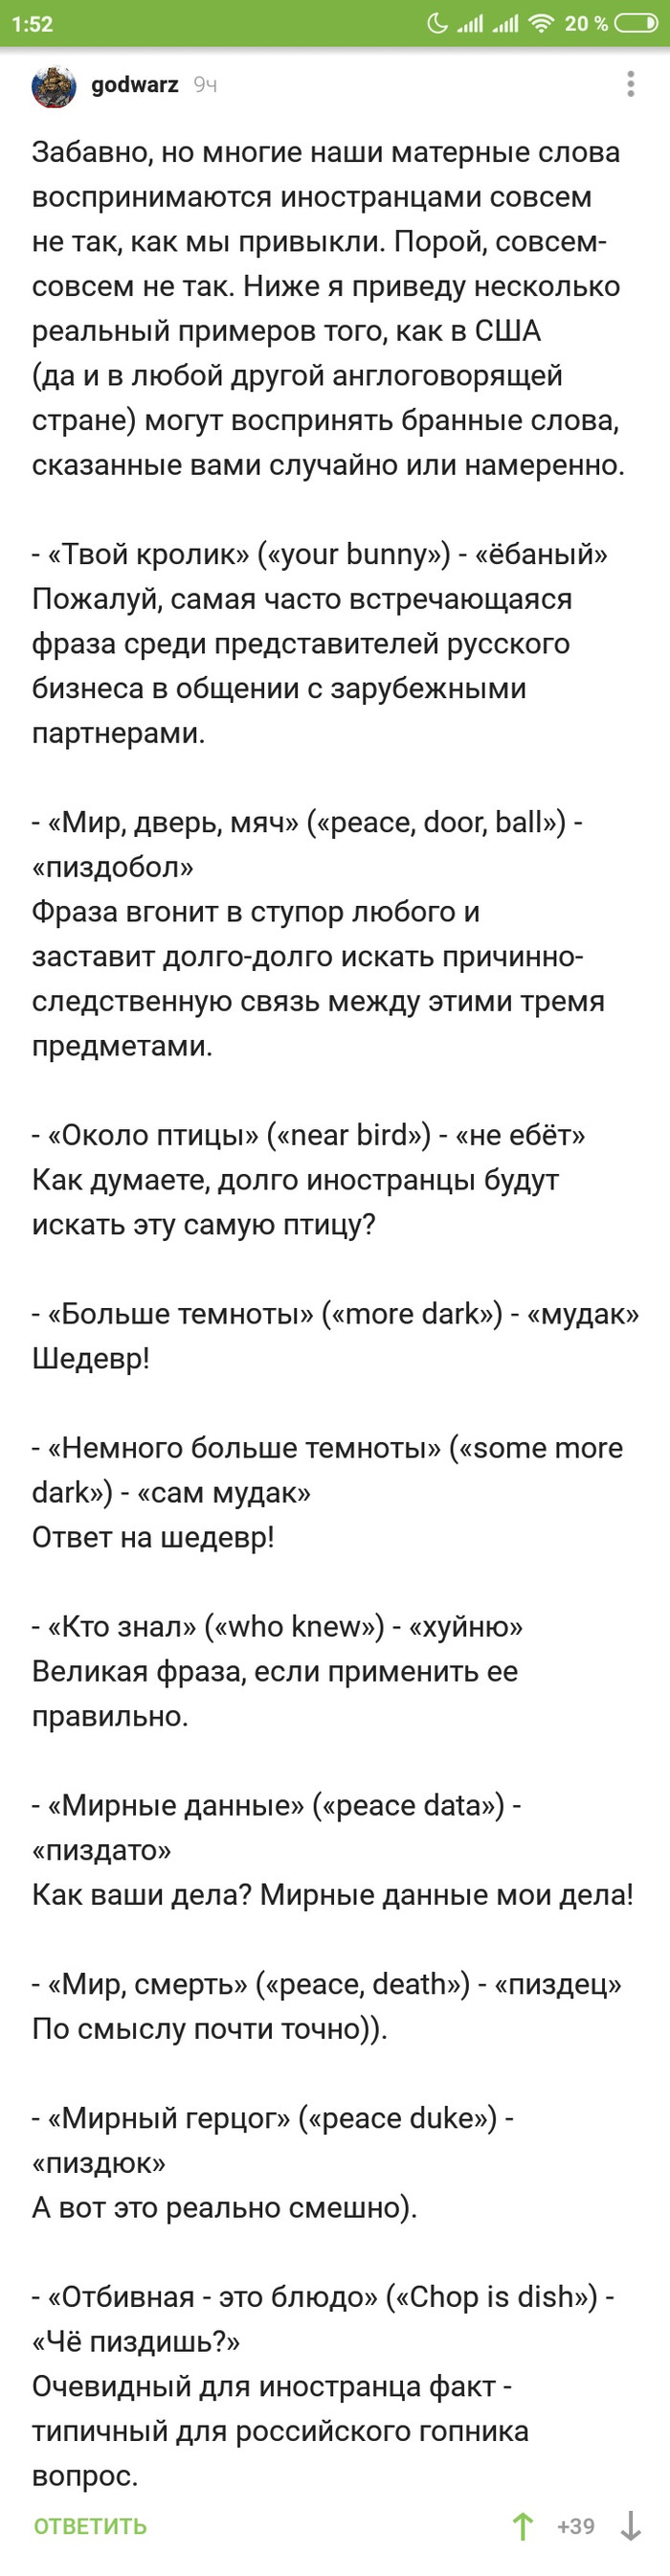 Learning Russian English - Russian, English language, Comments on Peekaboo, Longpost